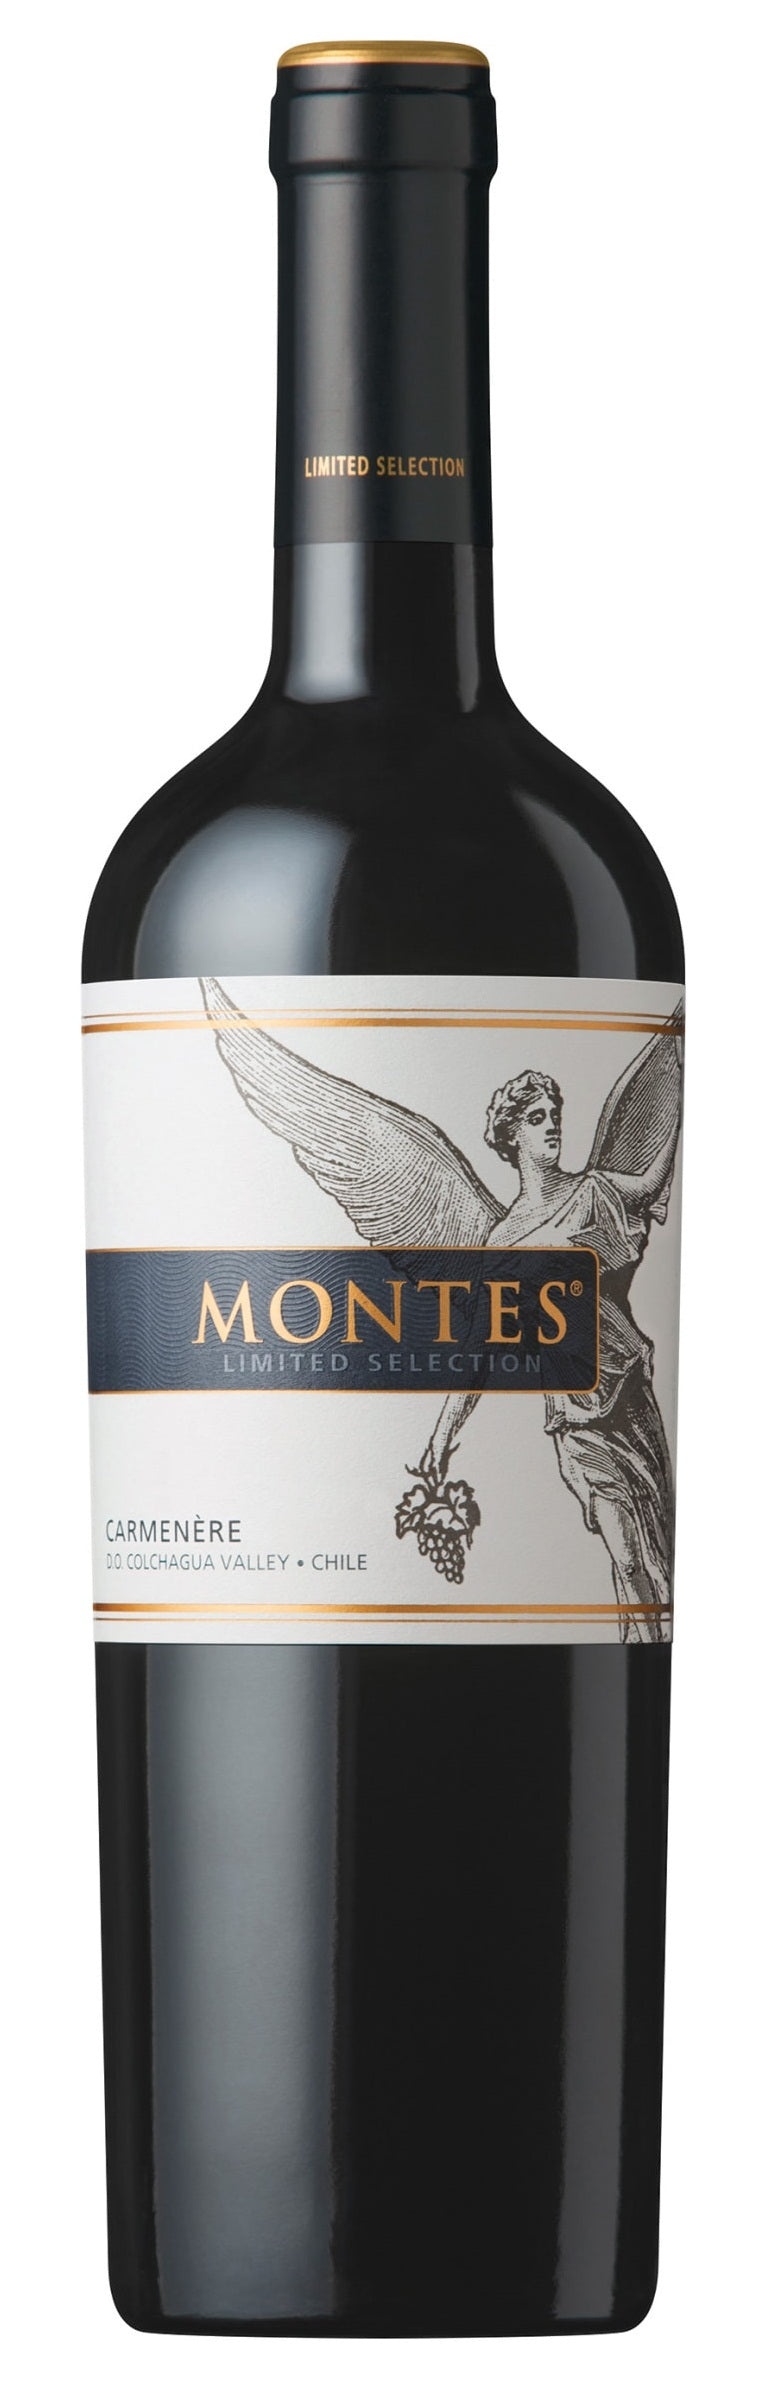 Montes Carmenere Limited Selection 2017